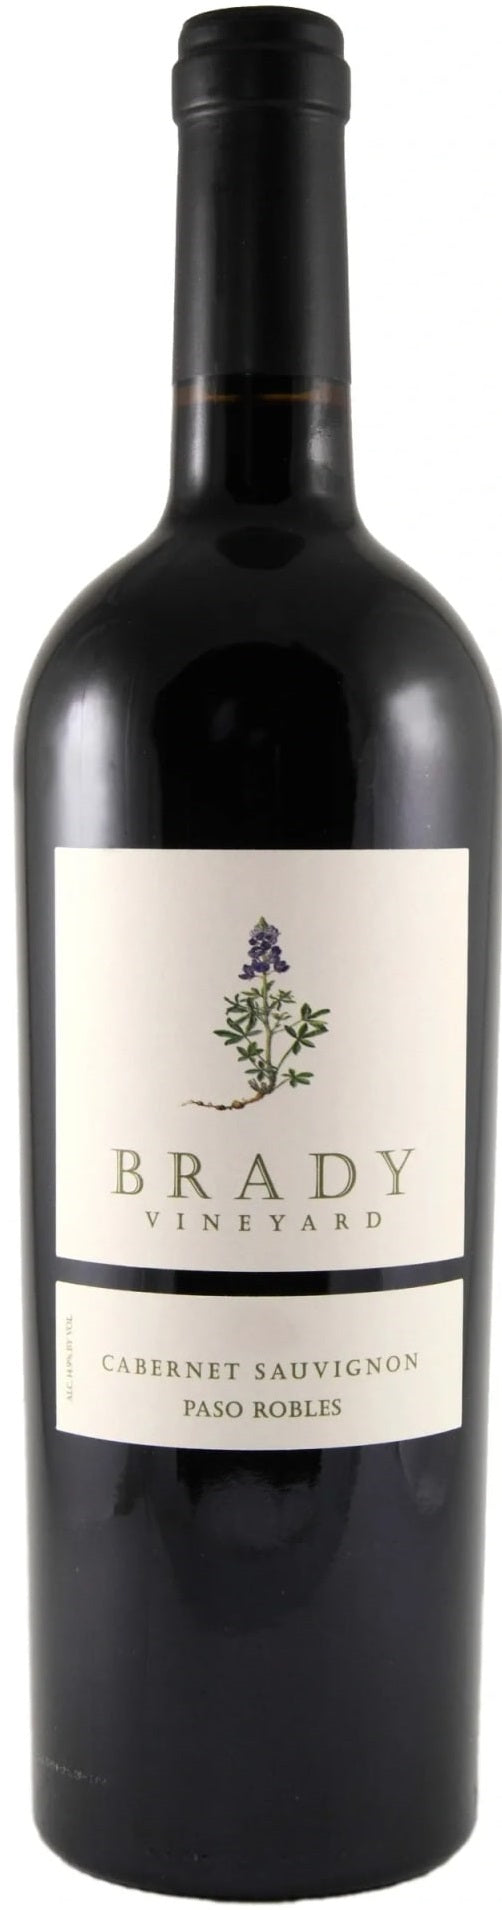 Brady Vineyard Cabernet Sauvignon 2019